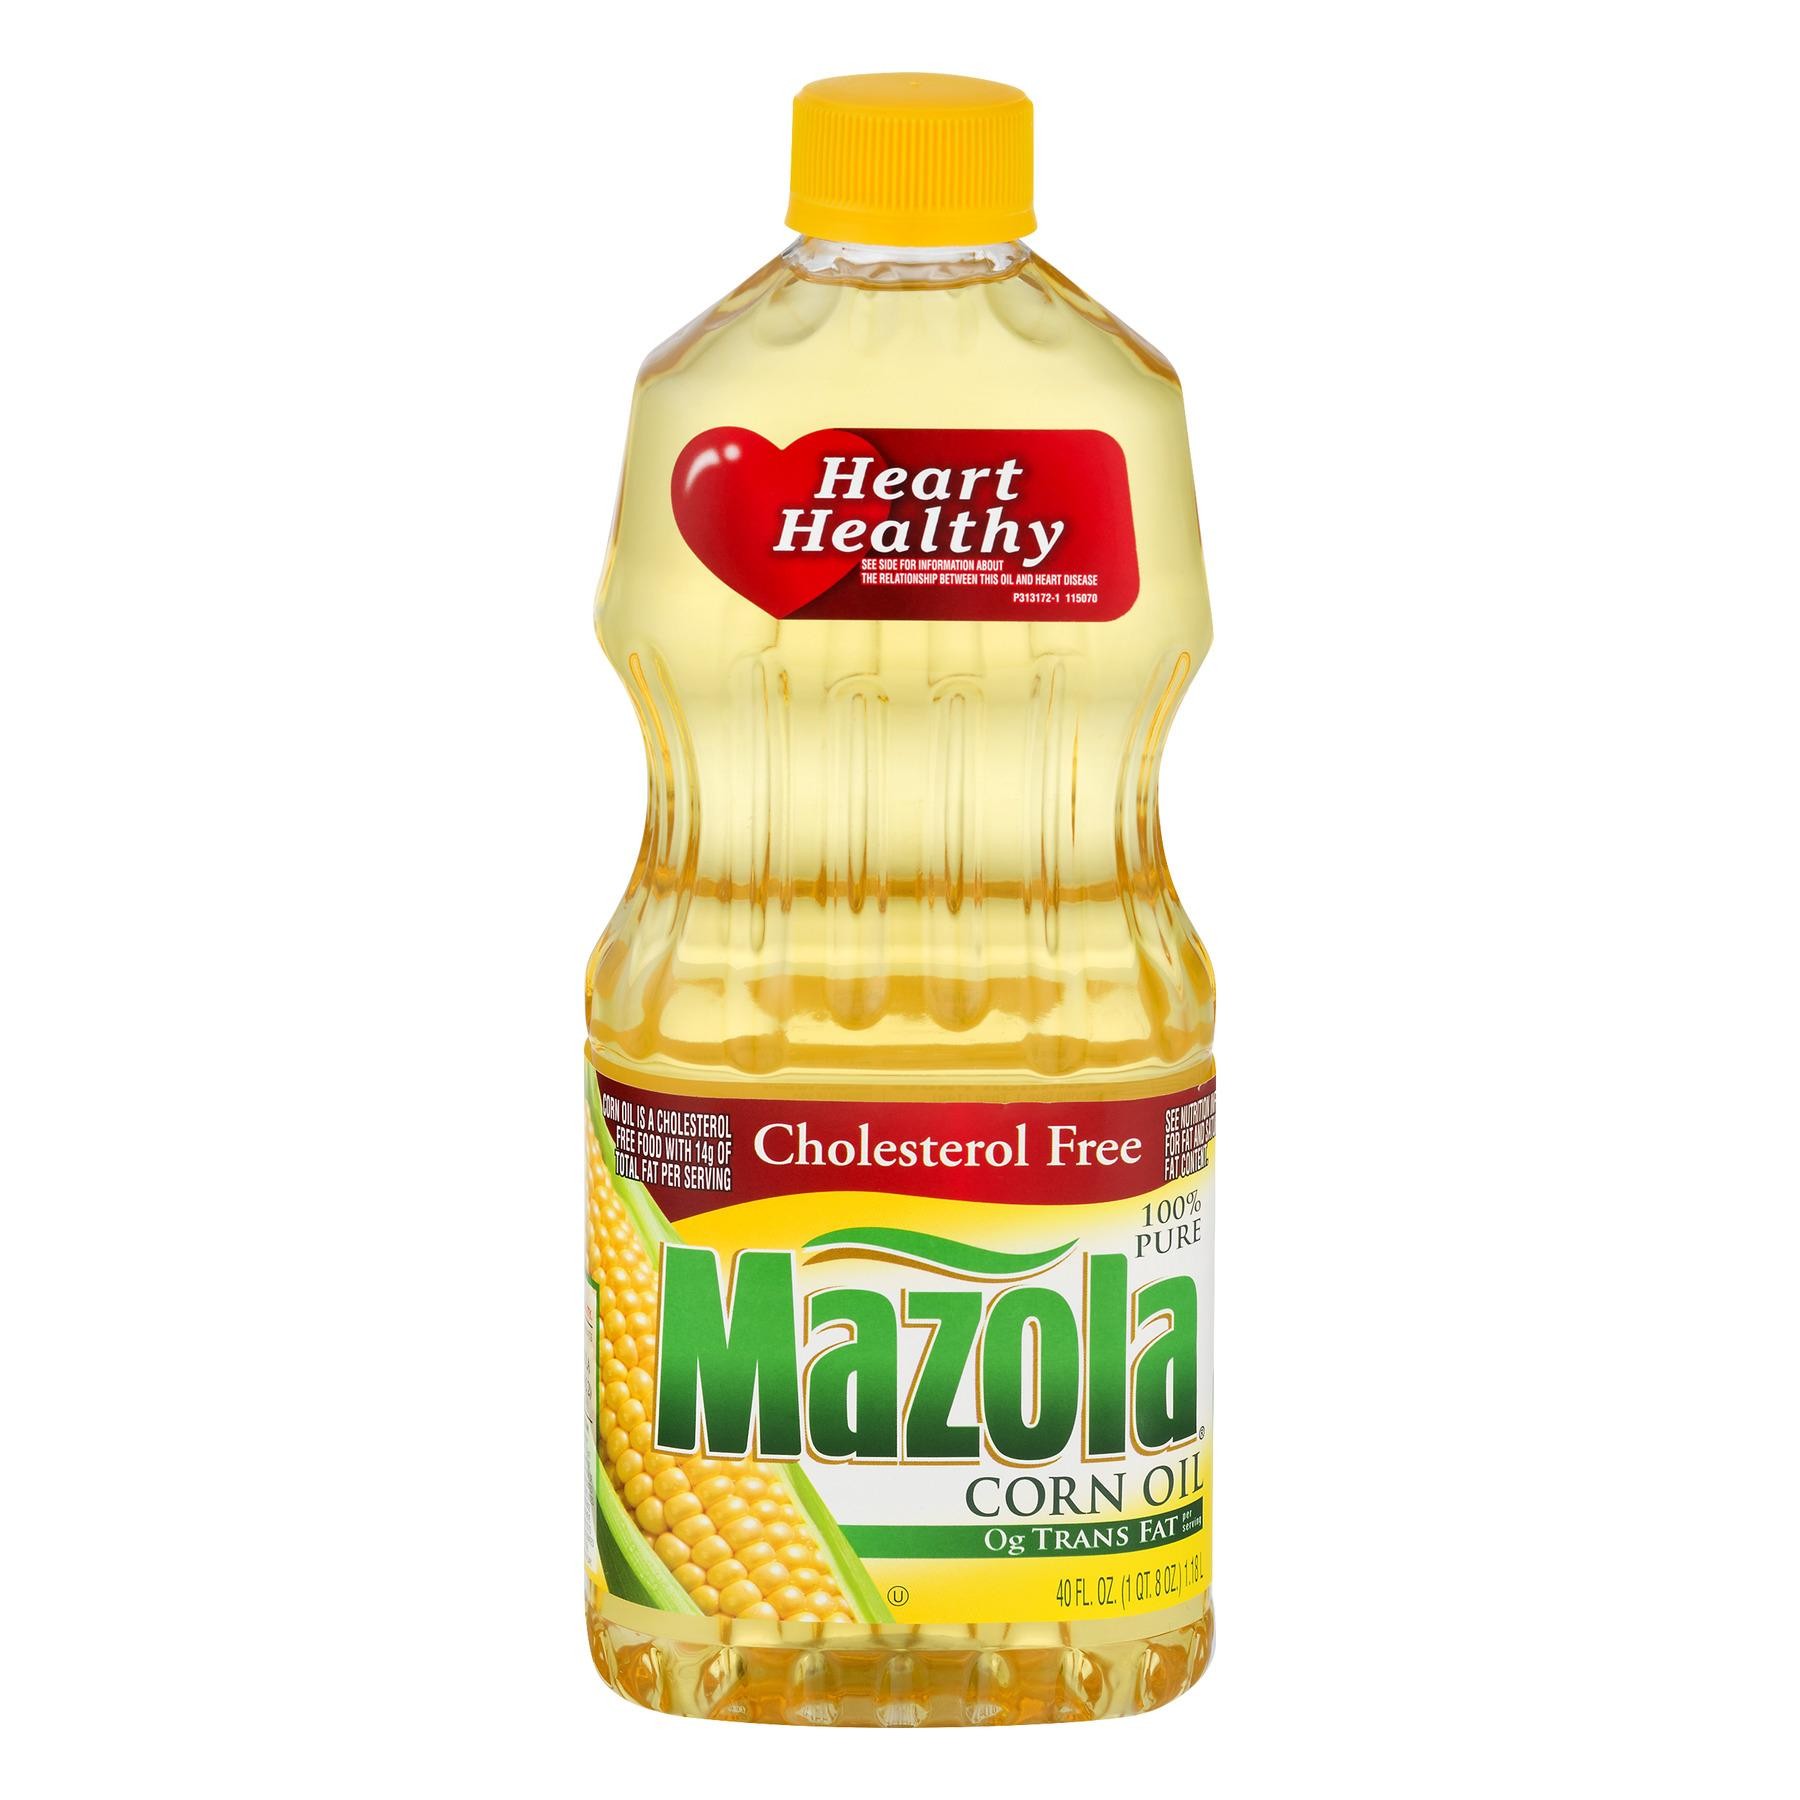 Mazola Corn Oil, 40 Oz